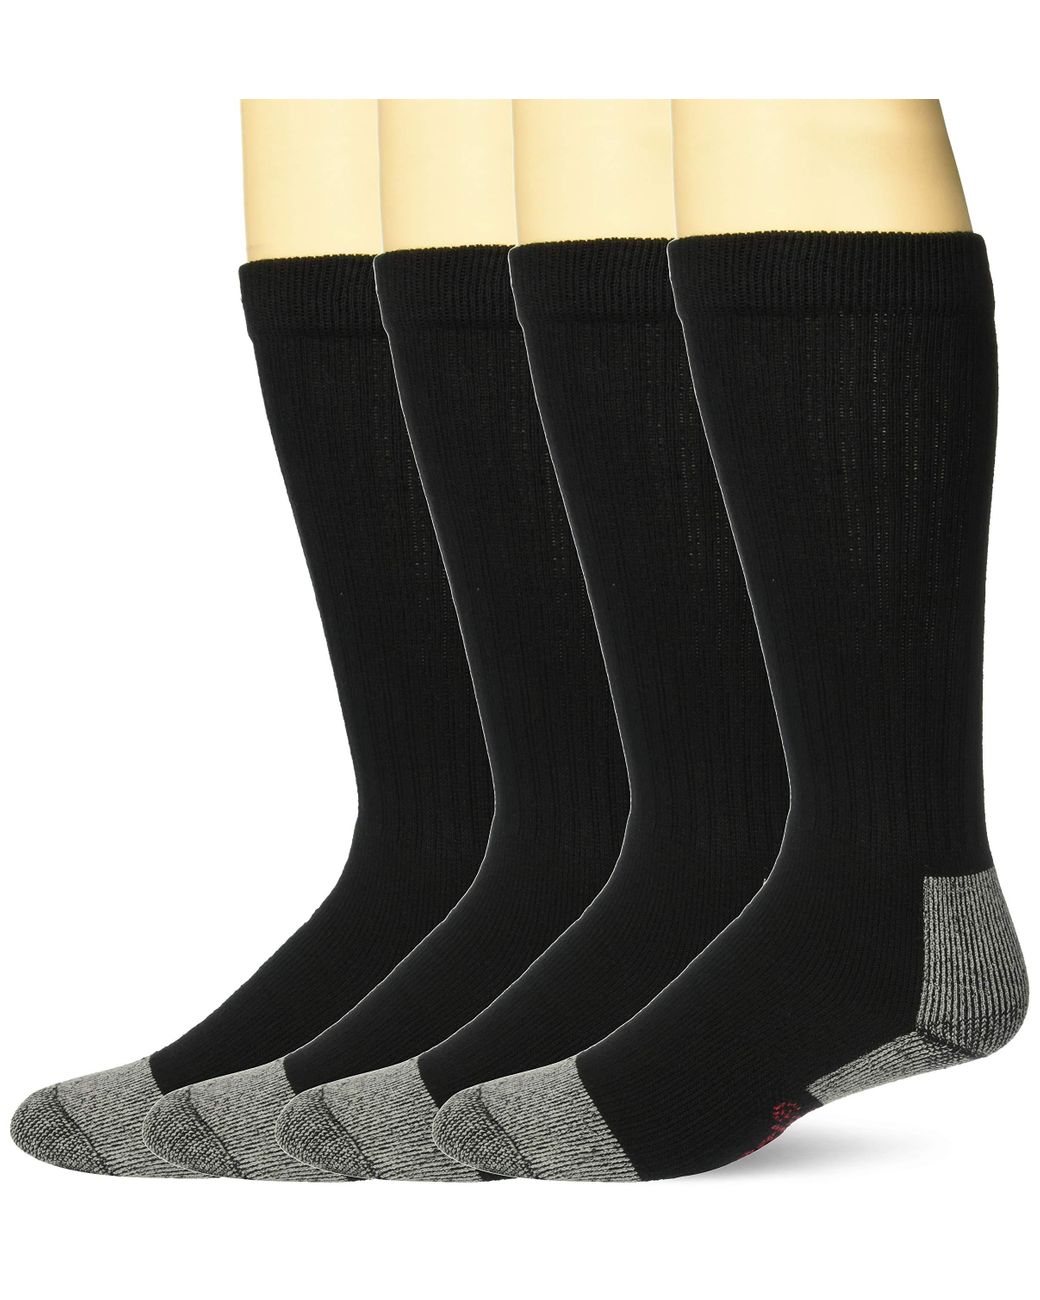 Wrangler Riggs Workwear Over The Calf Work Boot Socks 4 Pair Pack in ...